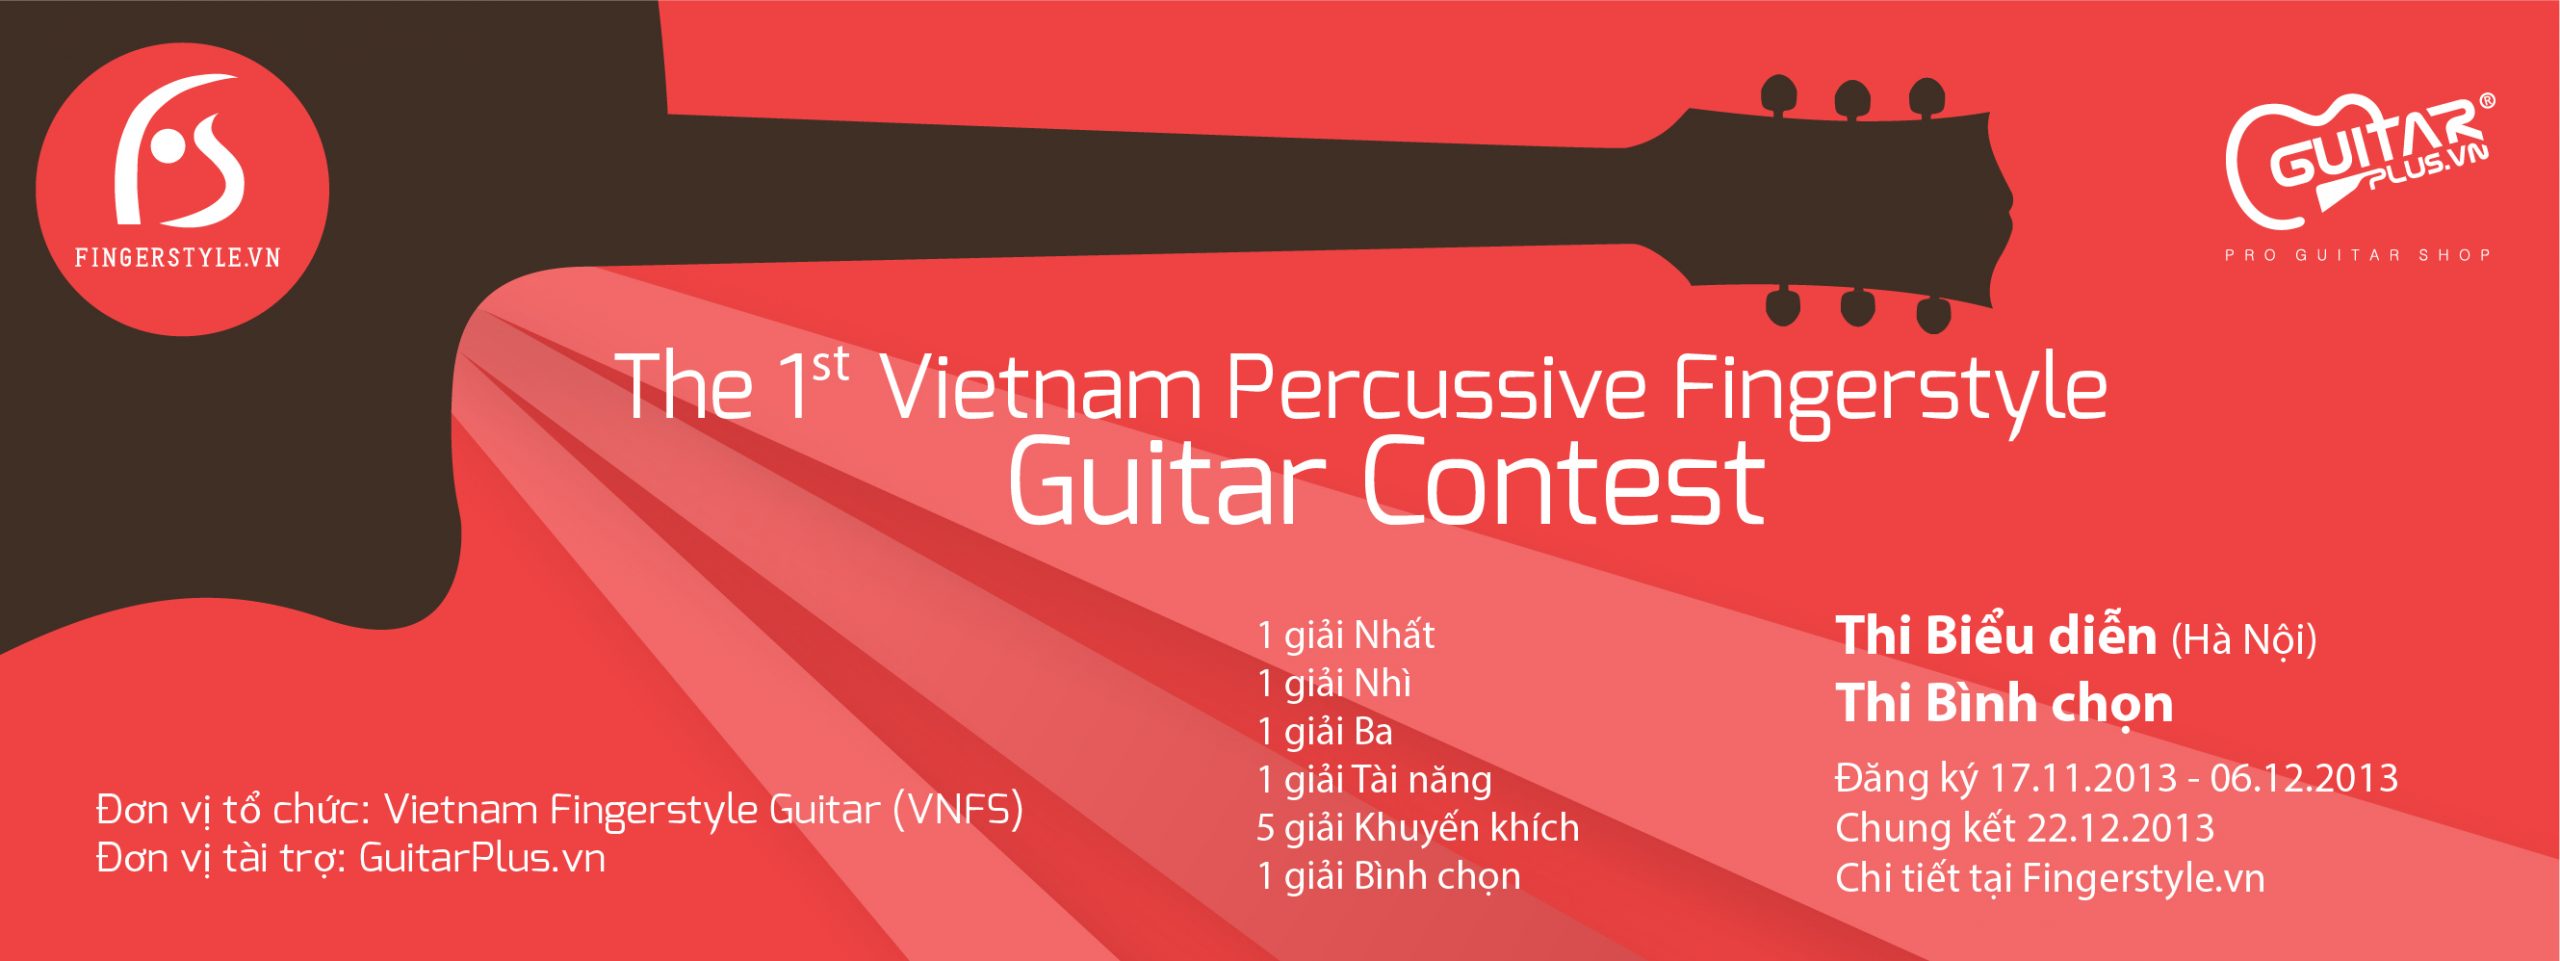 Thông tin The 1st Vietnam Percussive Fingerstyle Guitar Contest